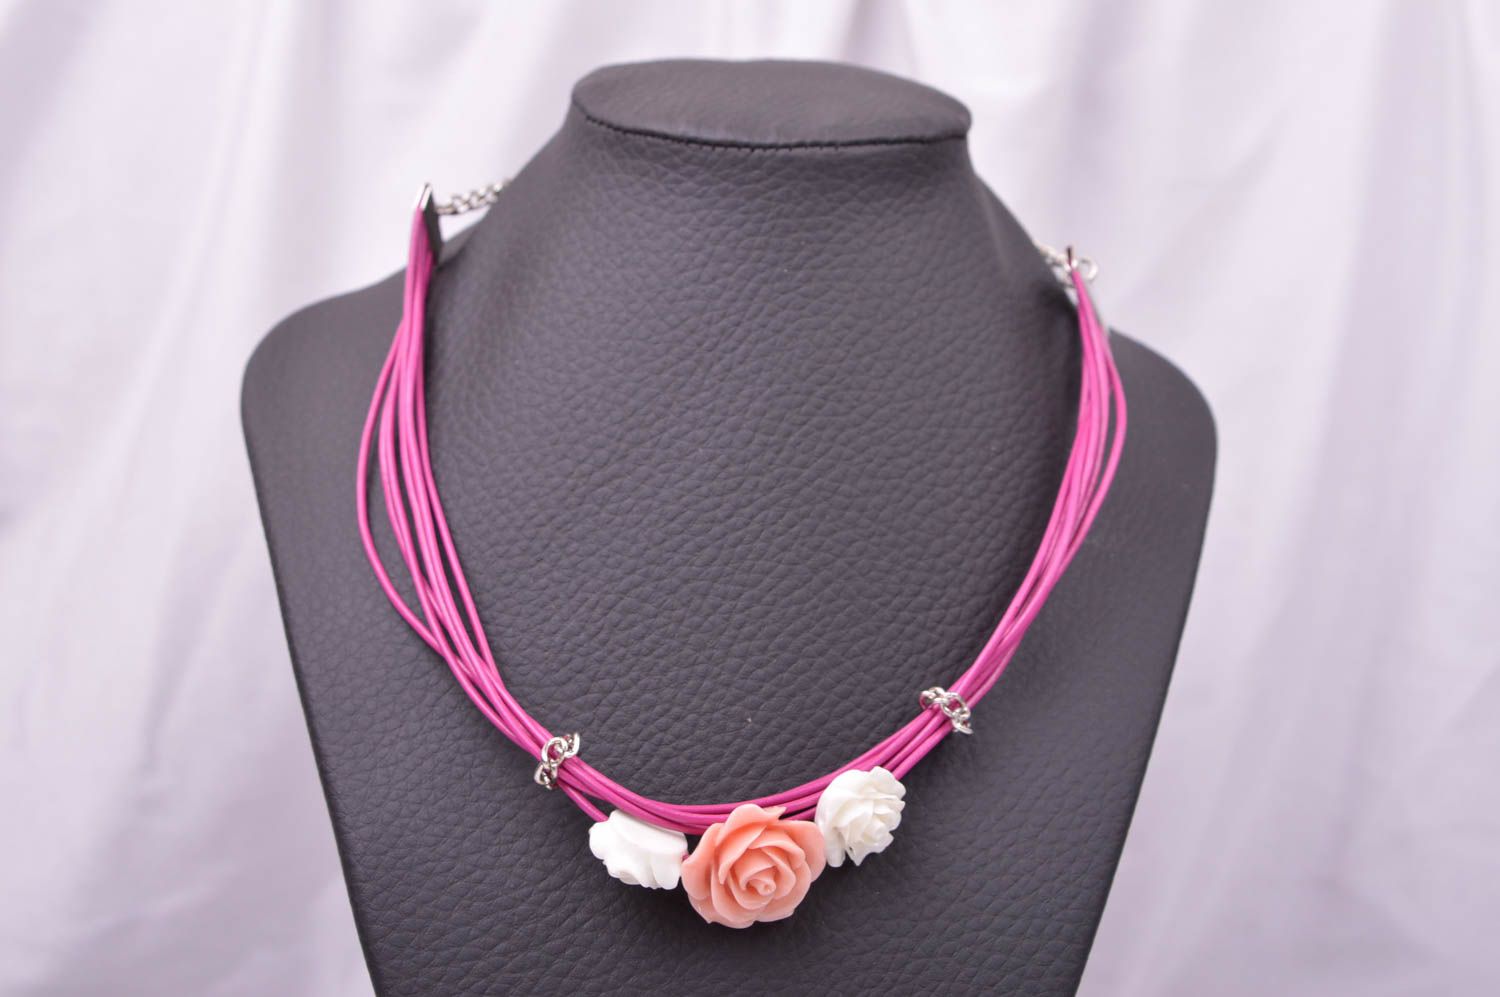 Handmade stylish accessory beautiful pink jewelry cute unusual present photo 1